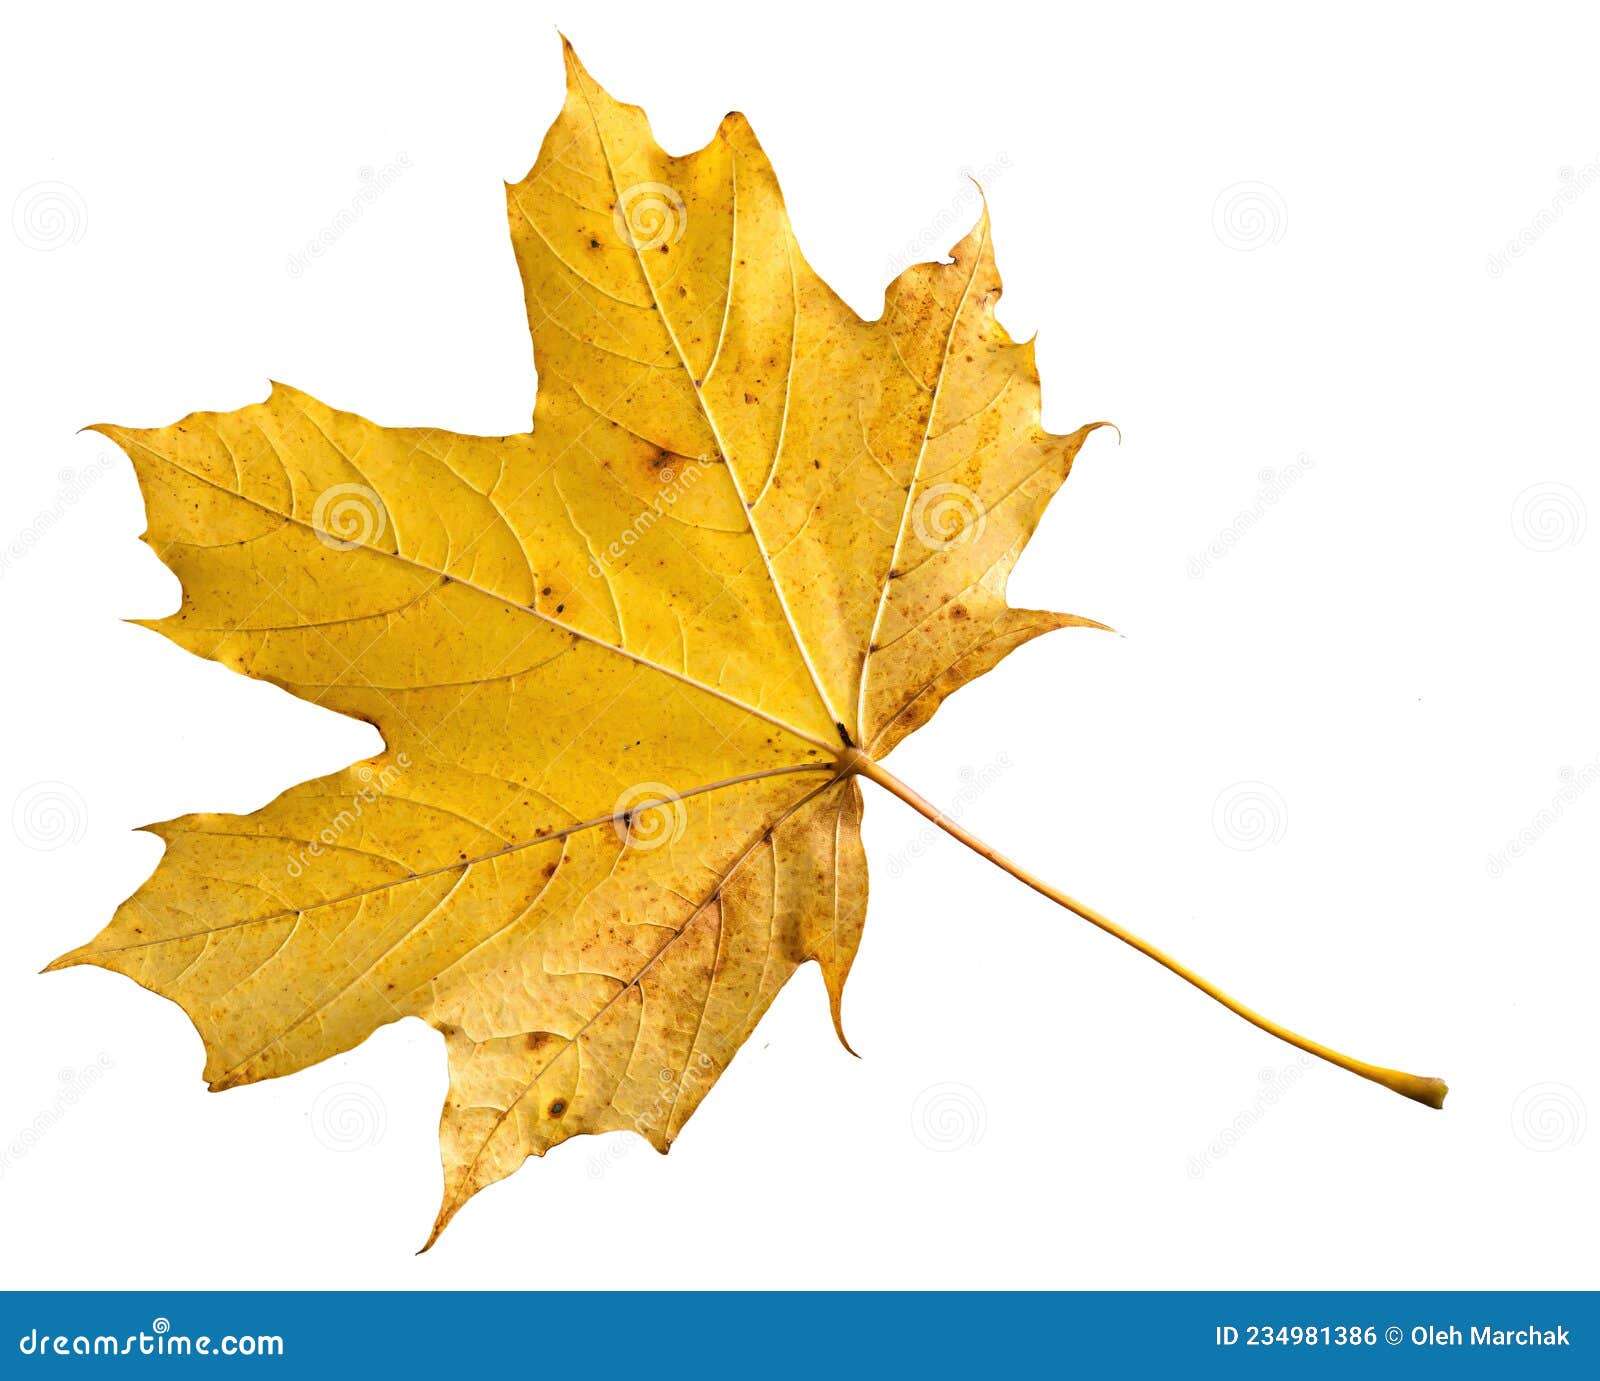 Yellow Maple Leaf As An Autumn Symbol Isolated On White Stock Photo